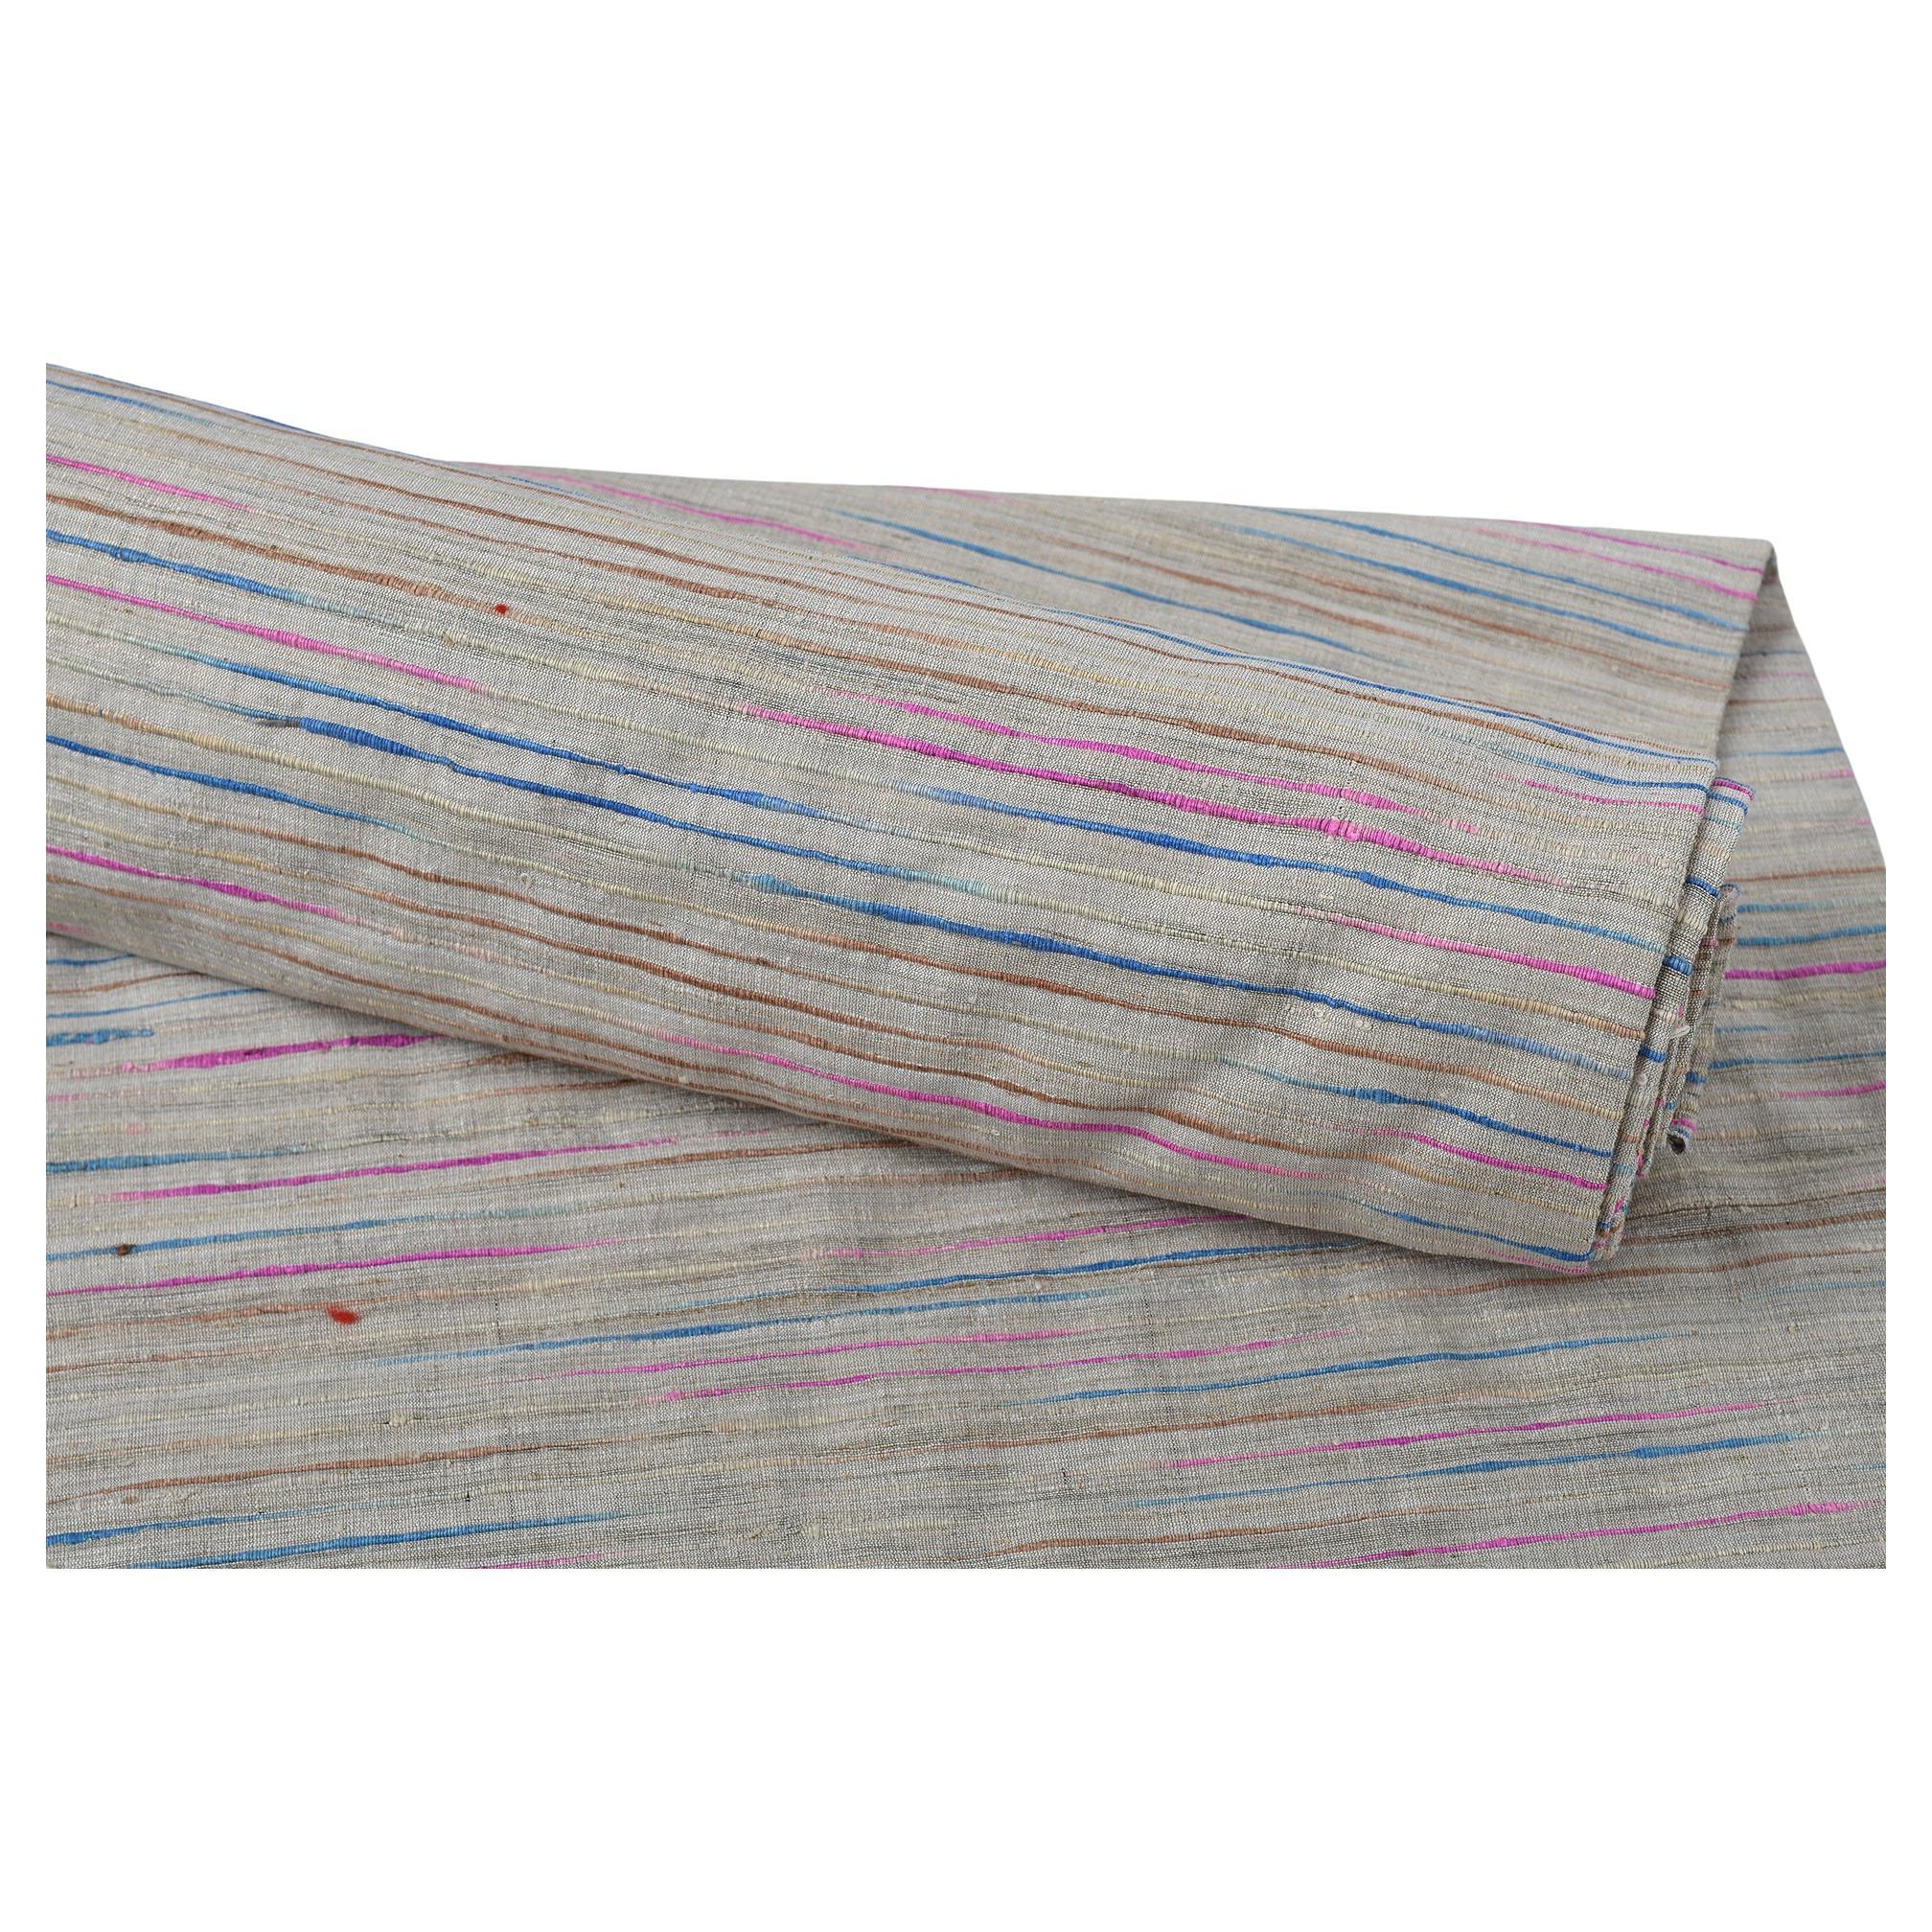 Jim Thompson Vintage Silk Textile Fabric